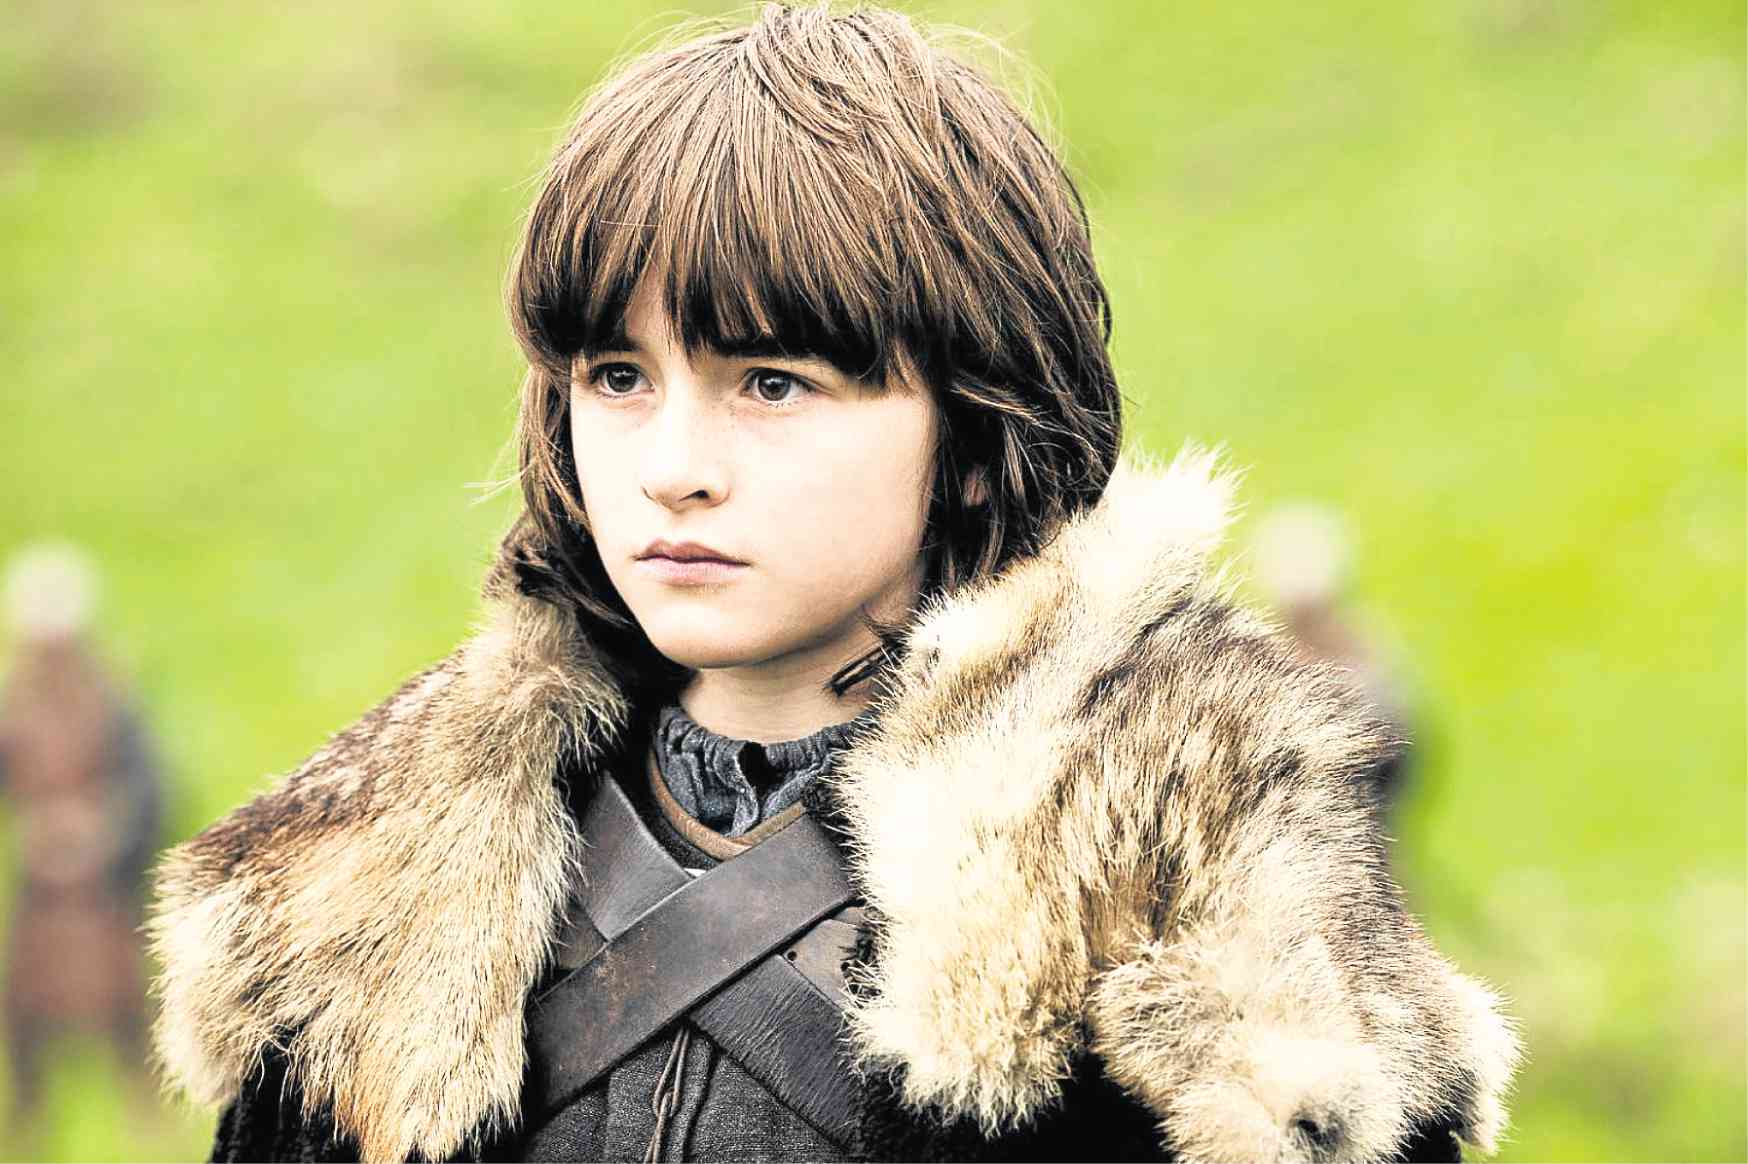 As Bran in the first season